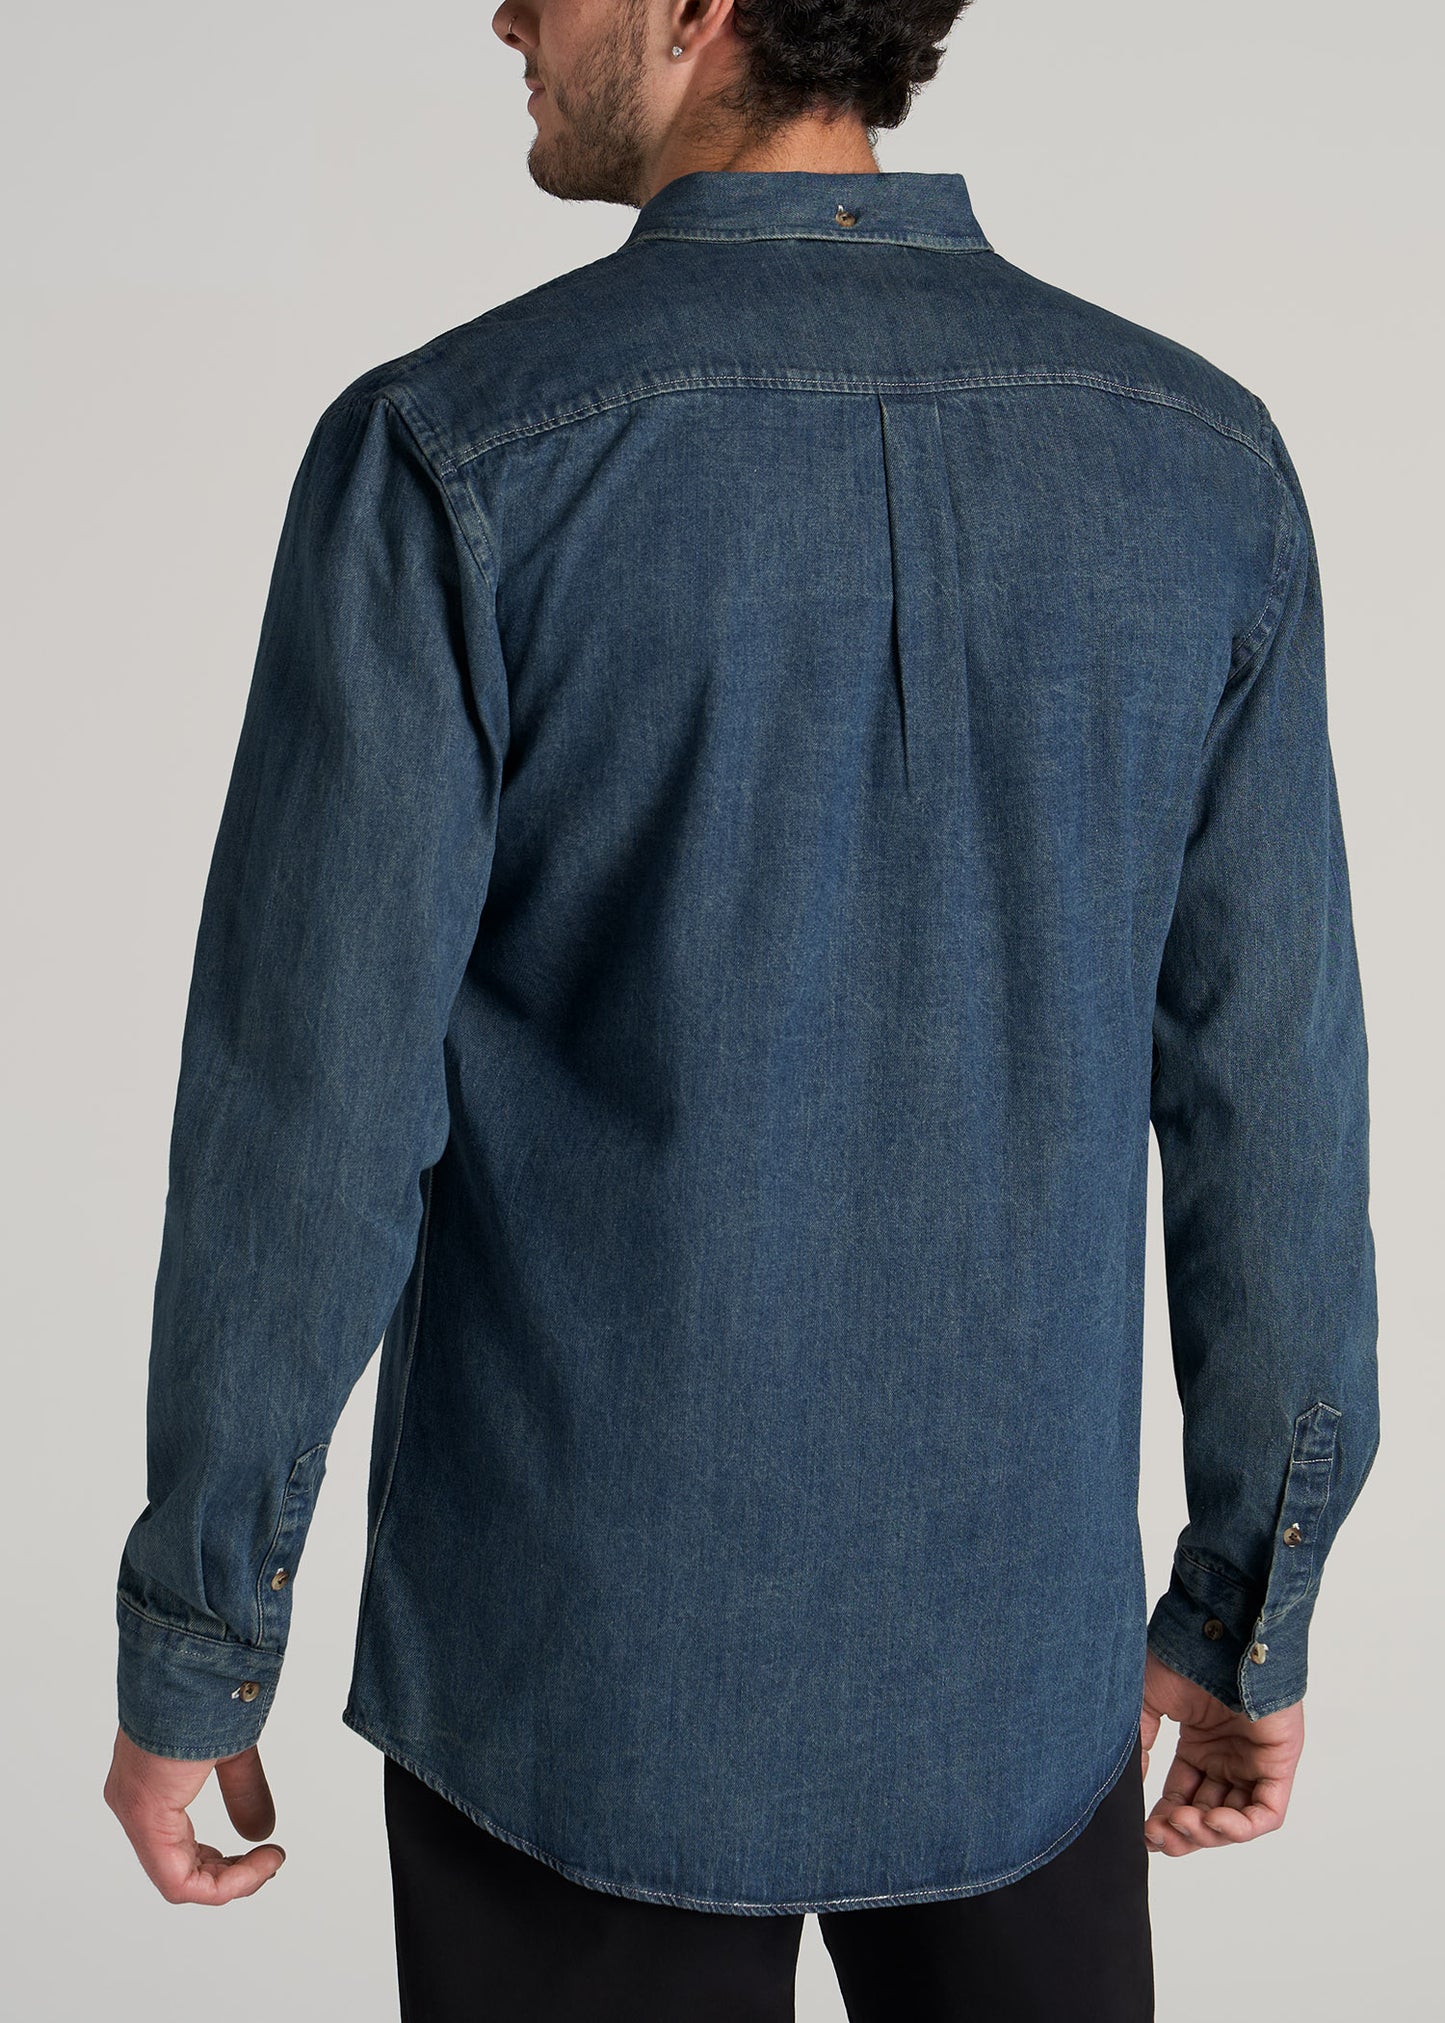 Cloth & Stone Chambray Denim Button-Up Shirt | Clothes, Womens denim shirt, Button  up shirts